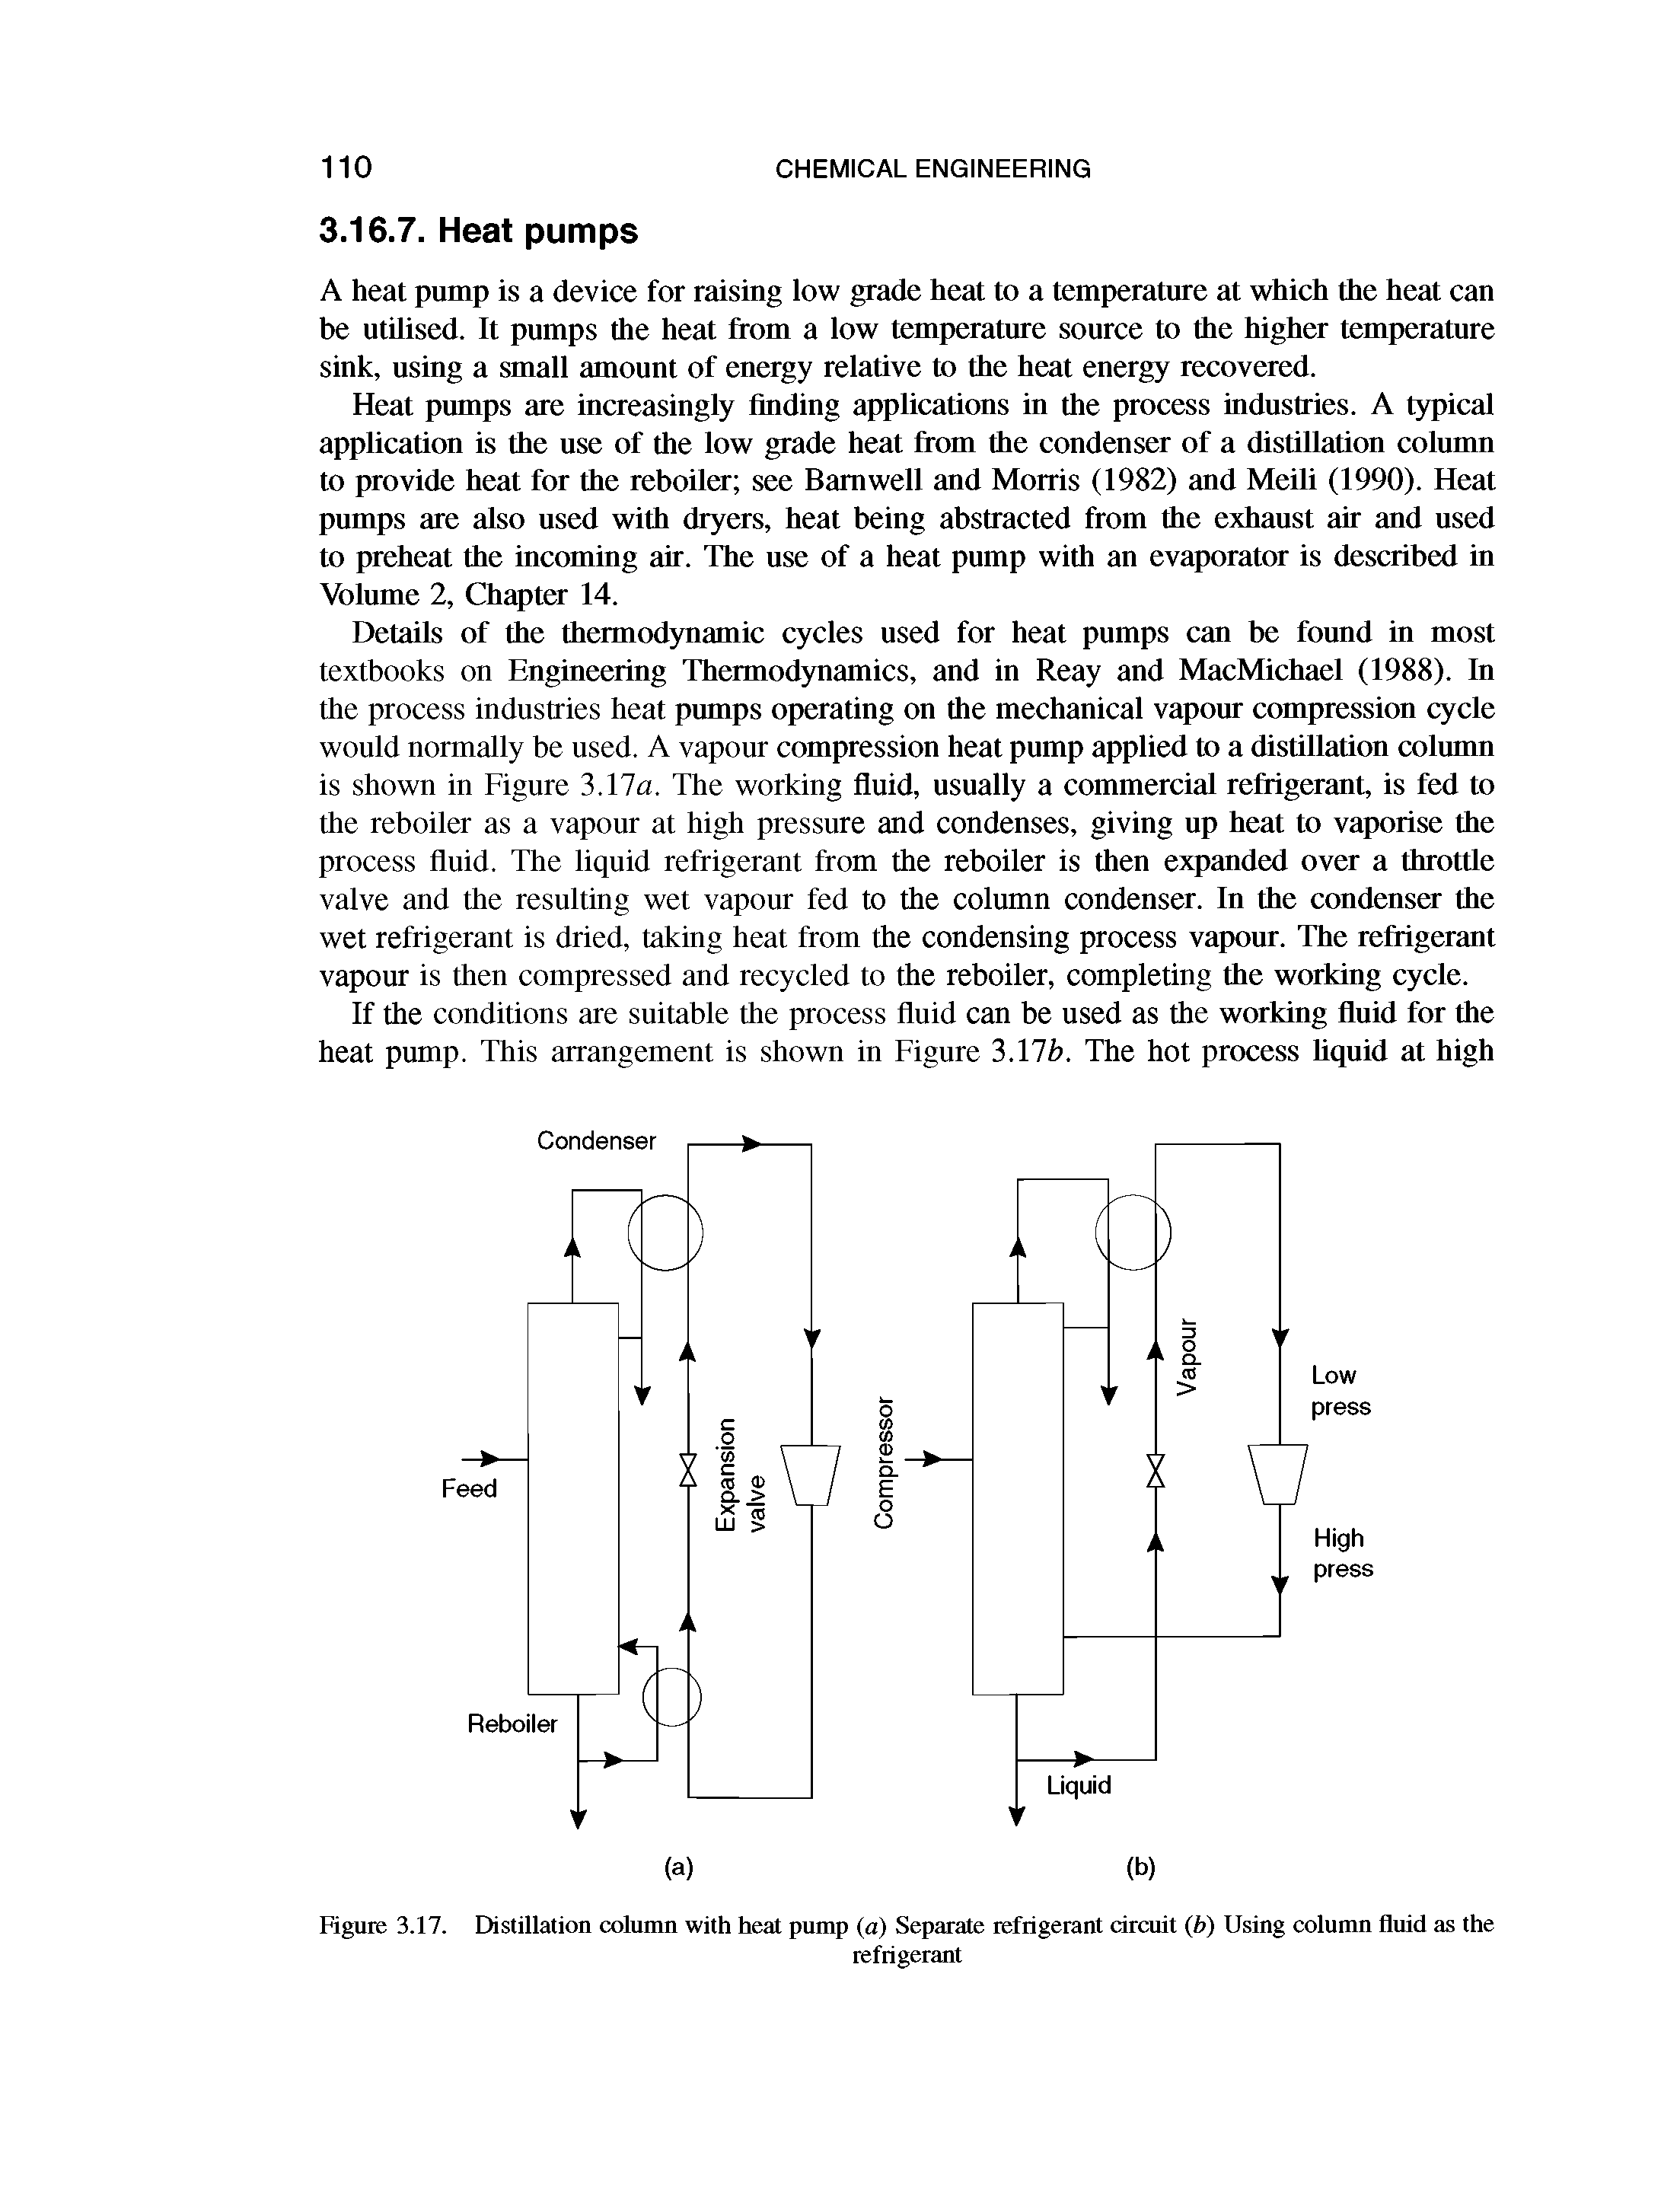 Figure 3.17. Distillation column with heat pump (a) Separate refrigerant circuit (b) Using column fluid as the...